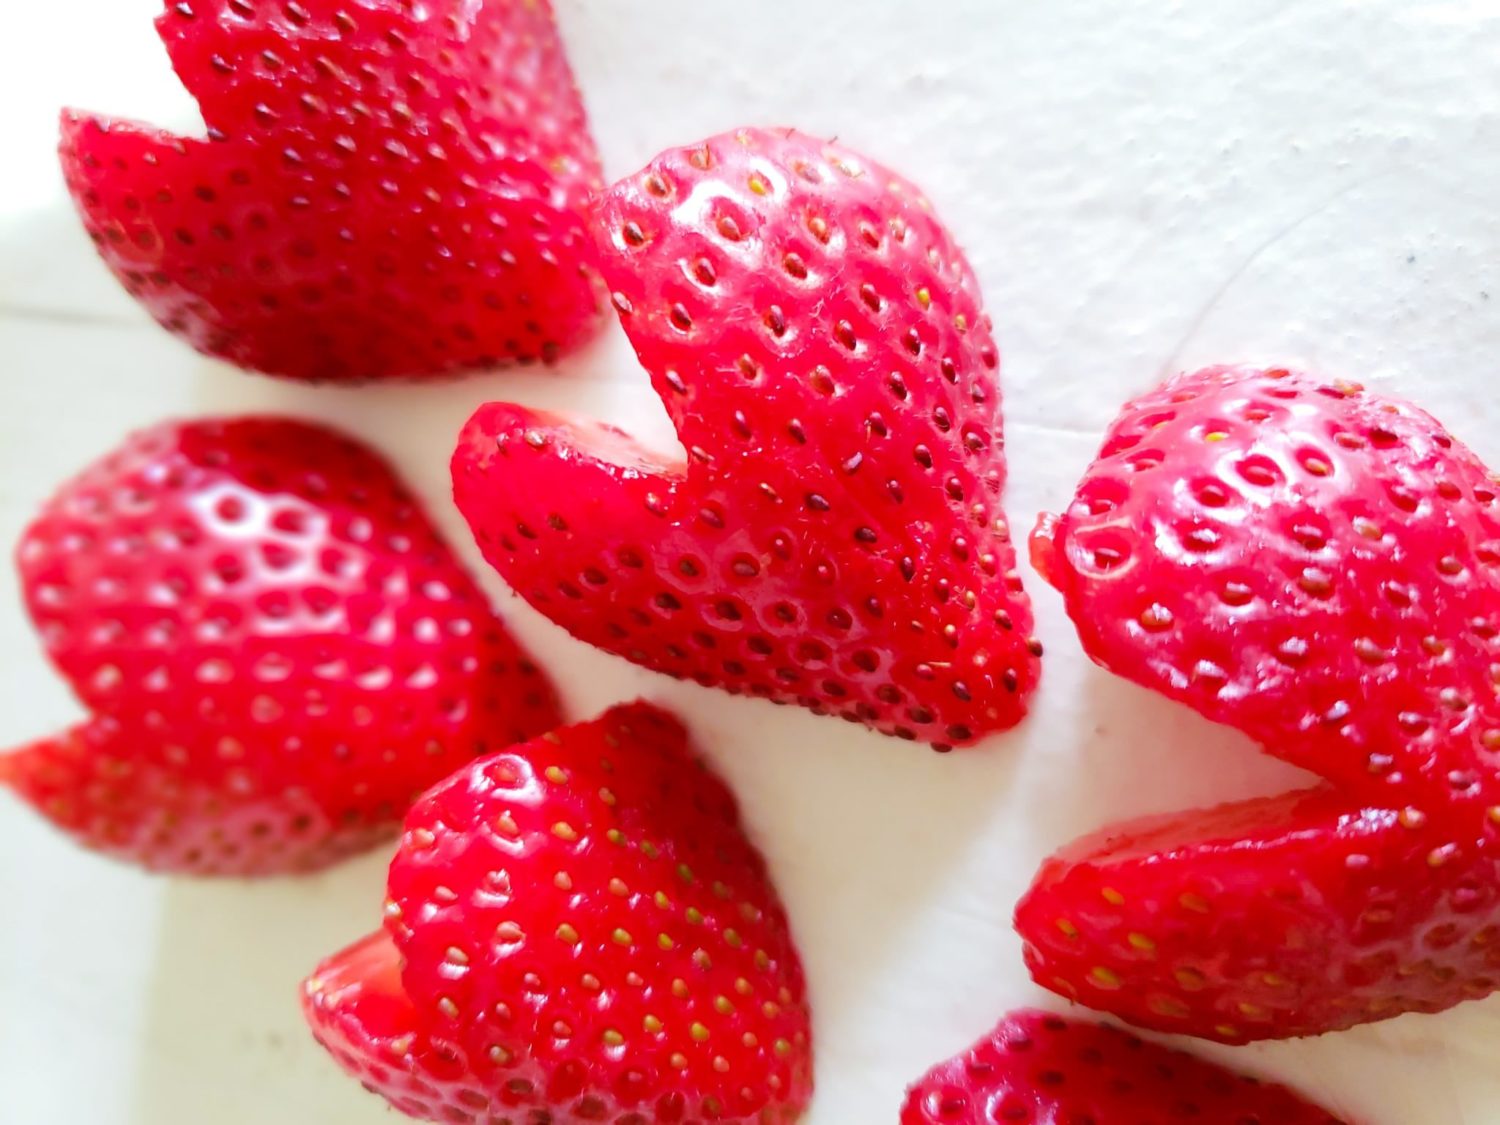 strawberries cut to look like little hearts